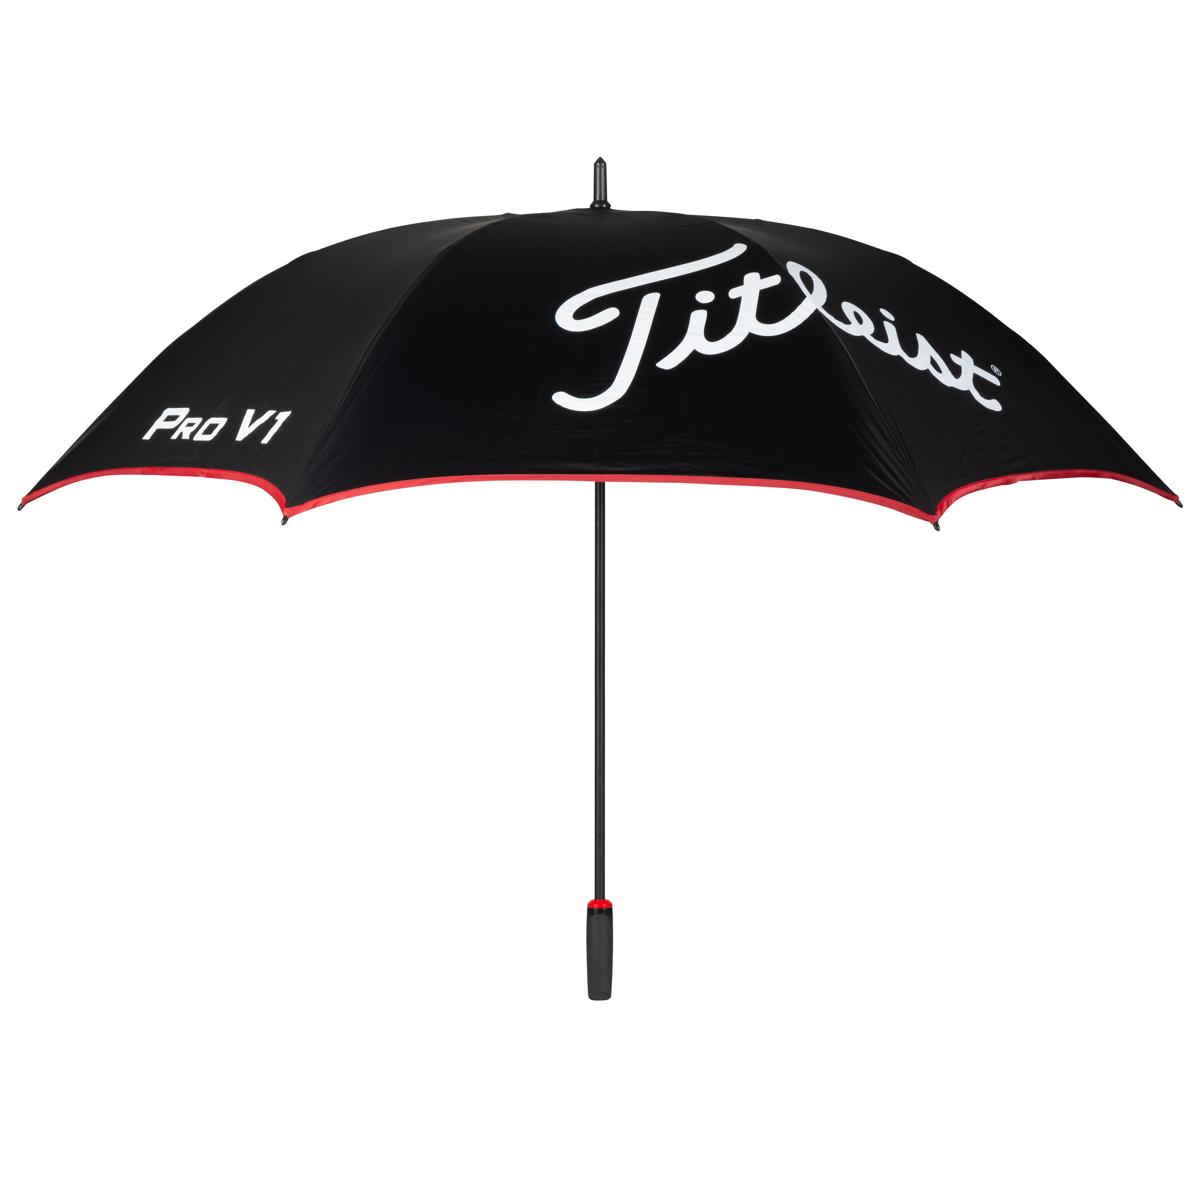 Tour Single Canopy Umbrella | Titleist Golf Umbrella